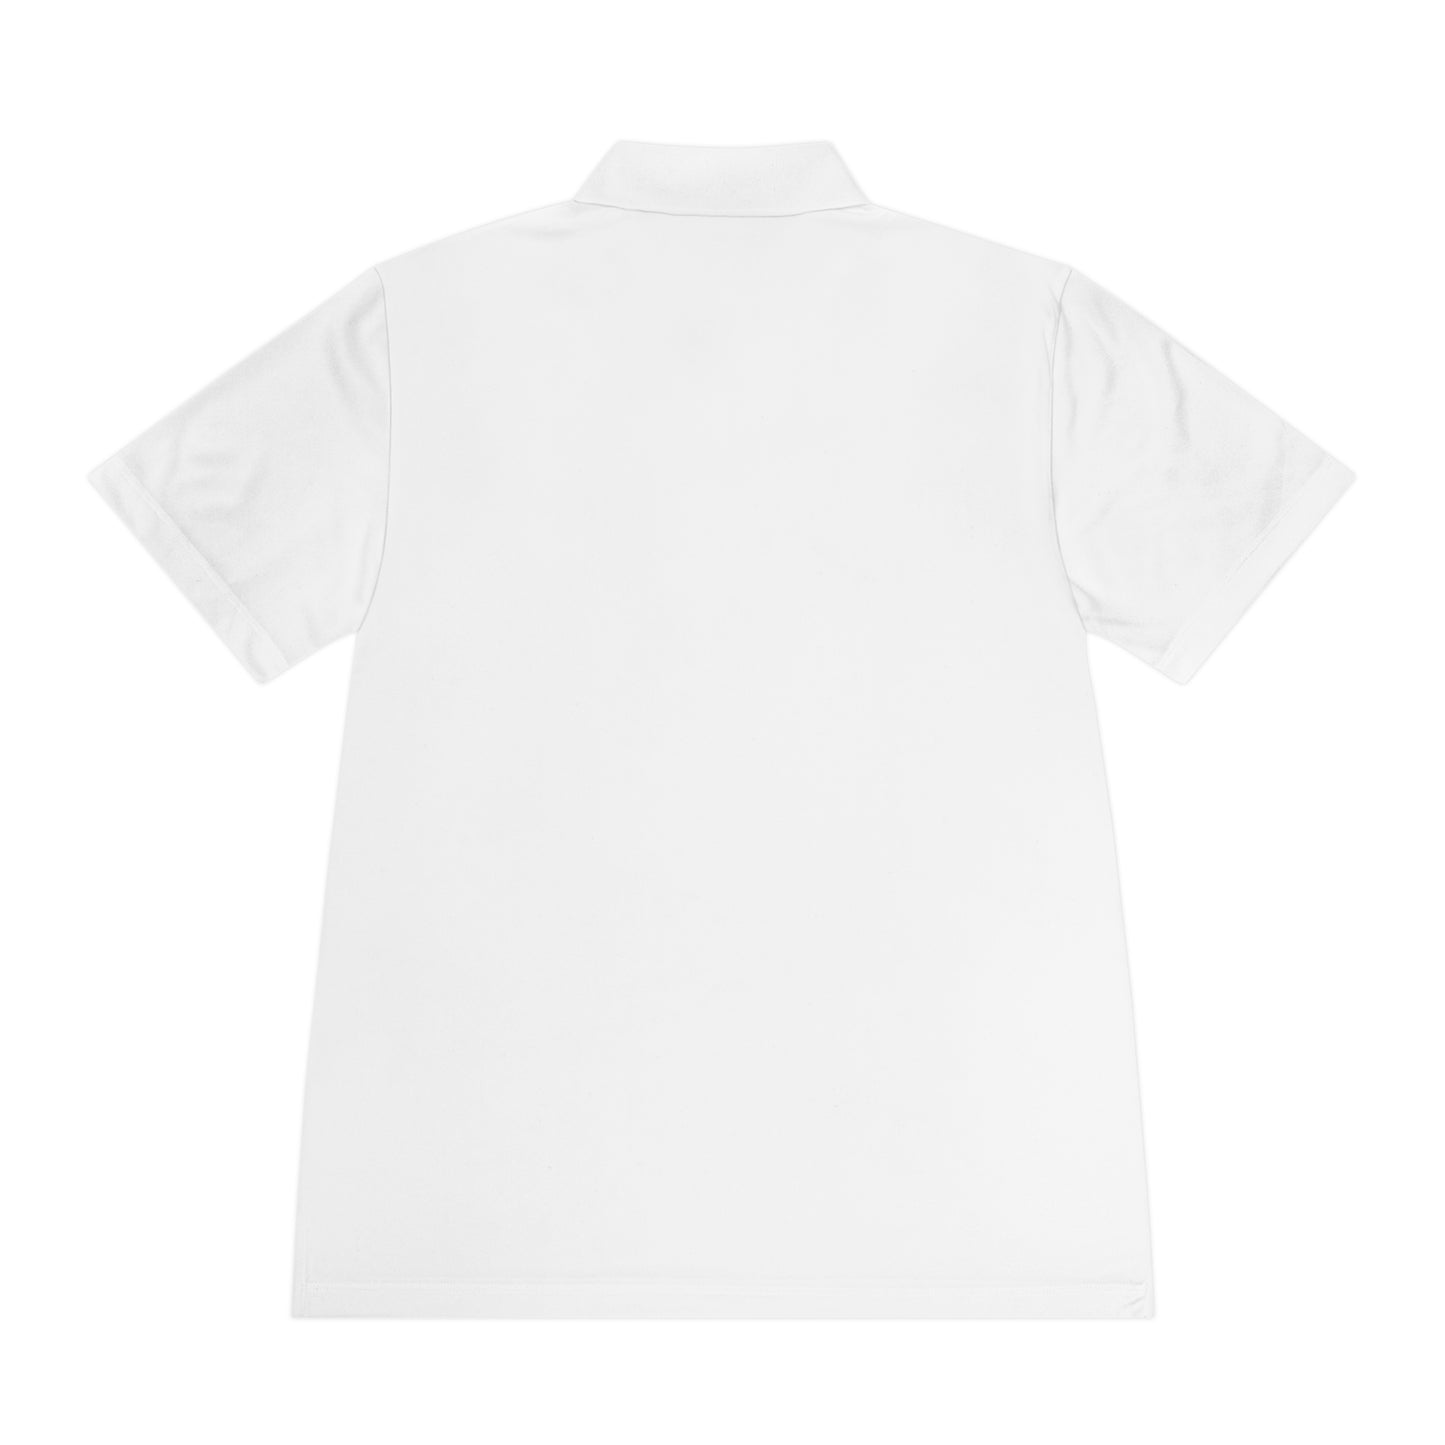 Best Quality Full Men's Sport Polo Shirt - Buy Now From WomenNtech